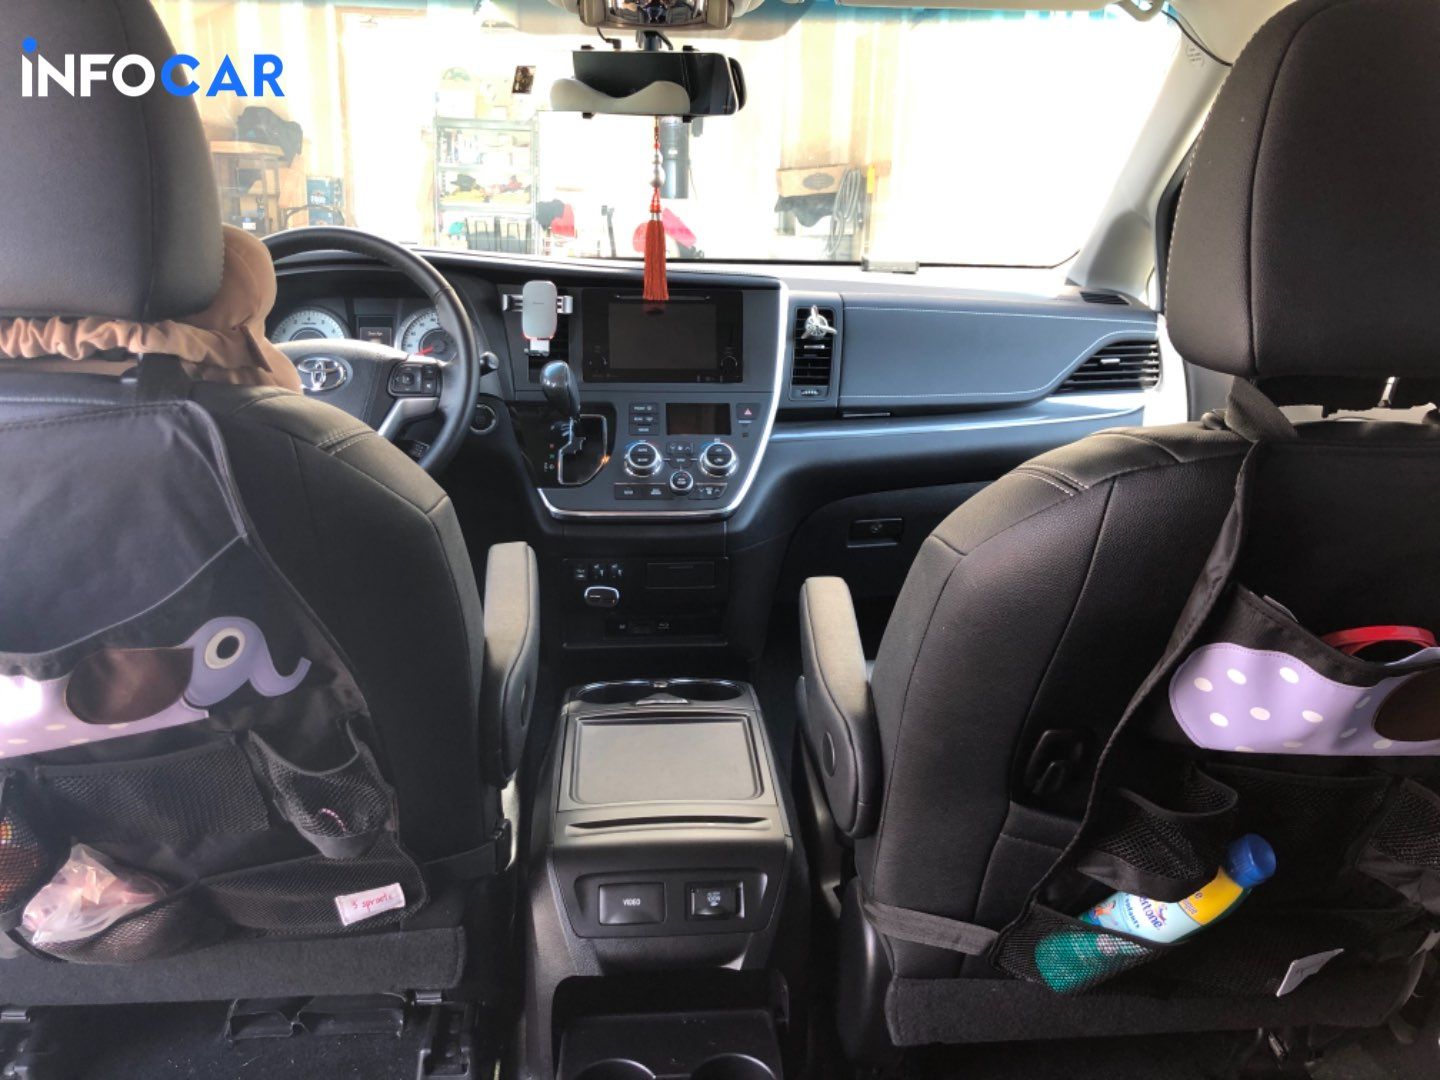 2015 Toyota Sienna SE 8 passengers - INFOCAR - Toronto Auto Trading Platform